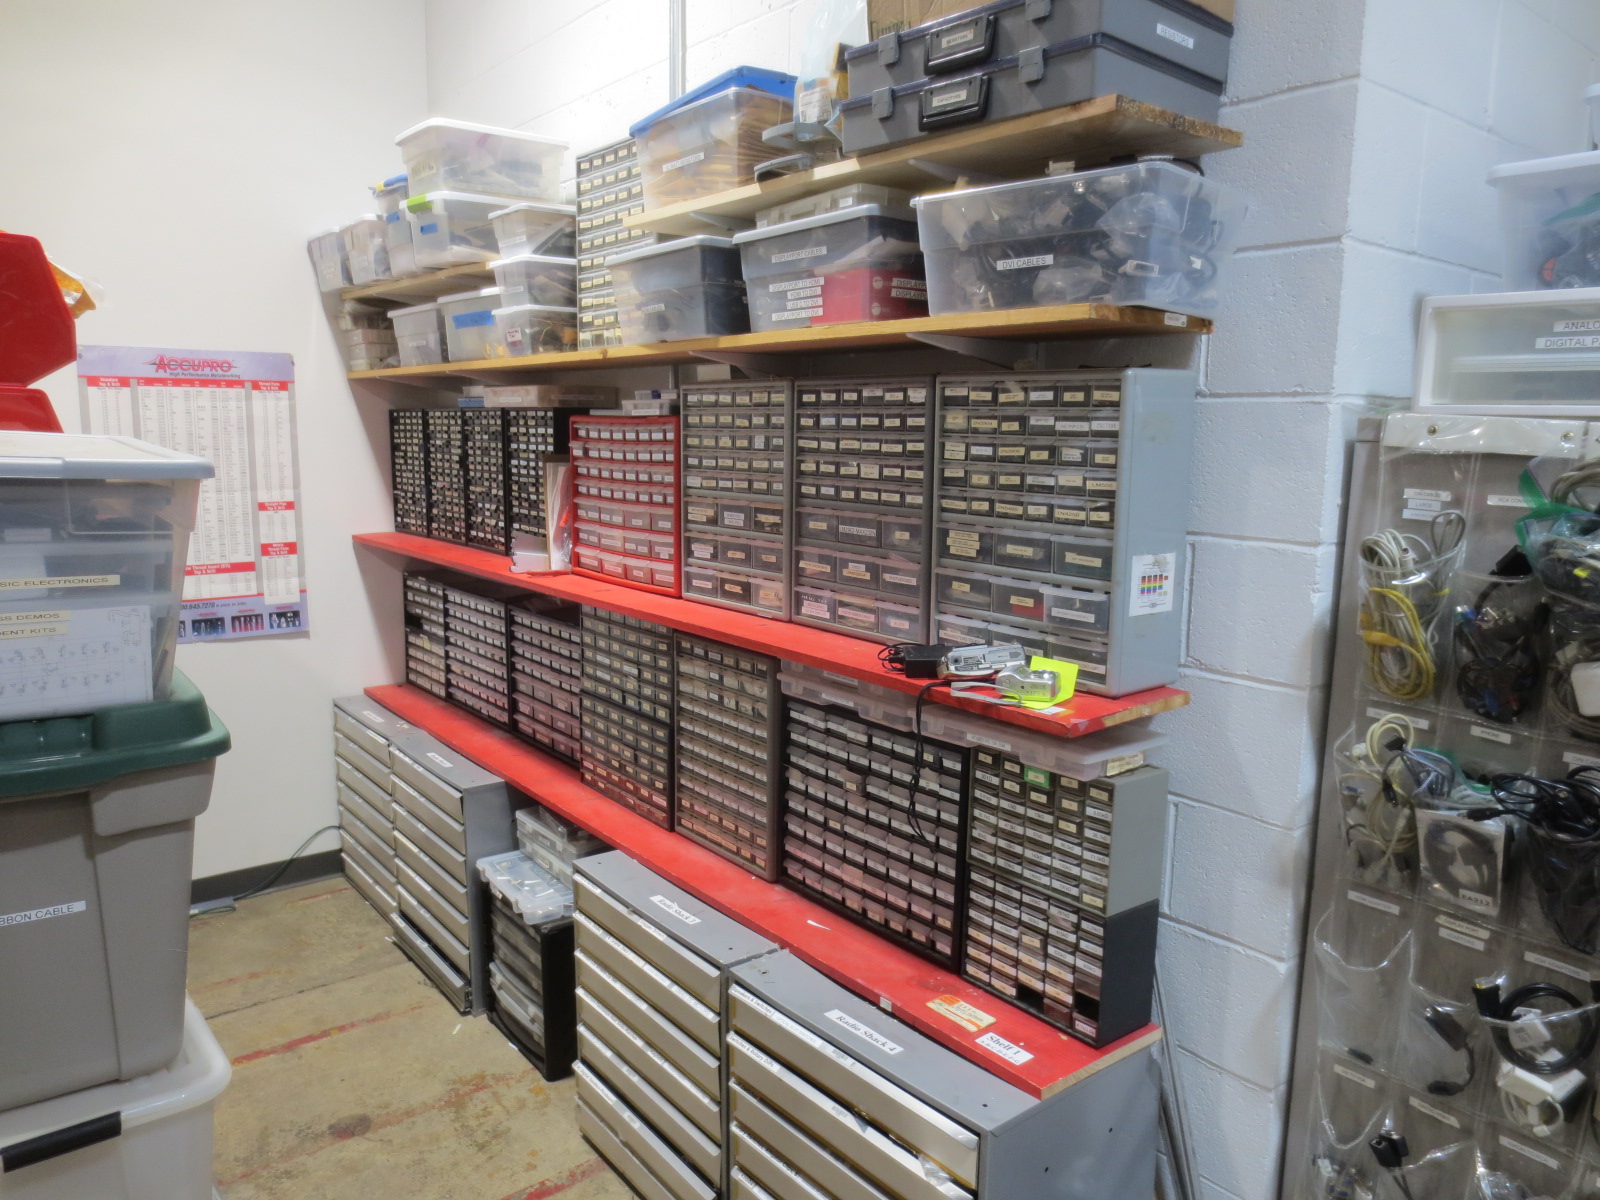 E&R Radio Shack bins and shelves